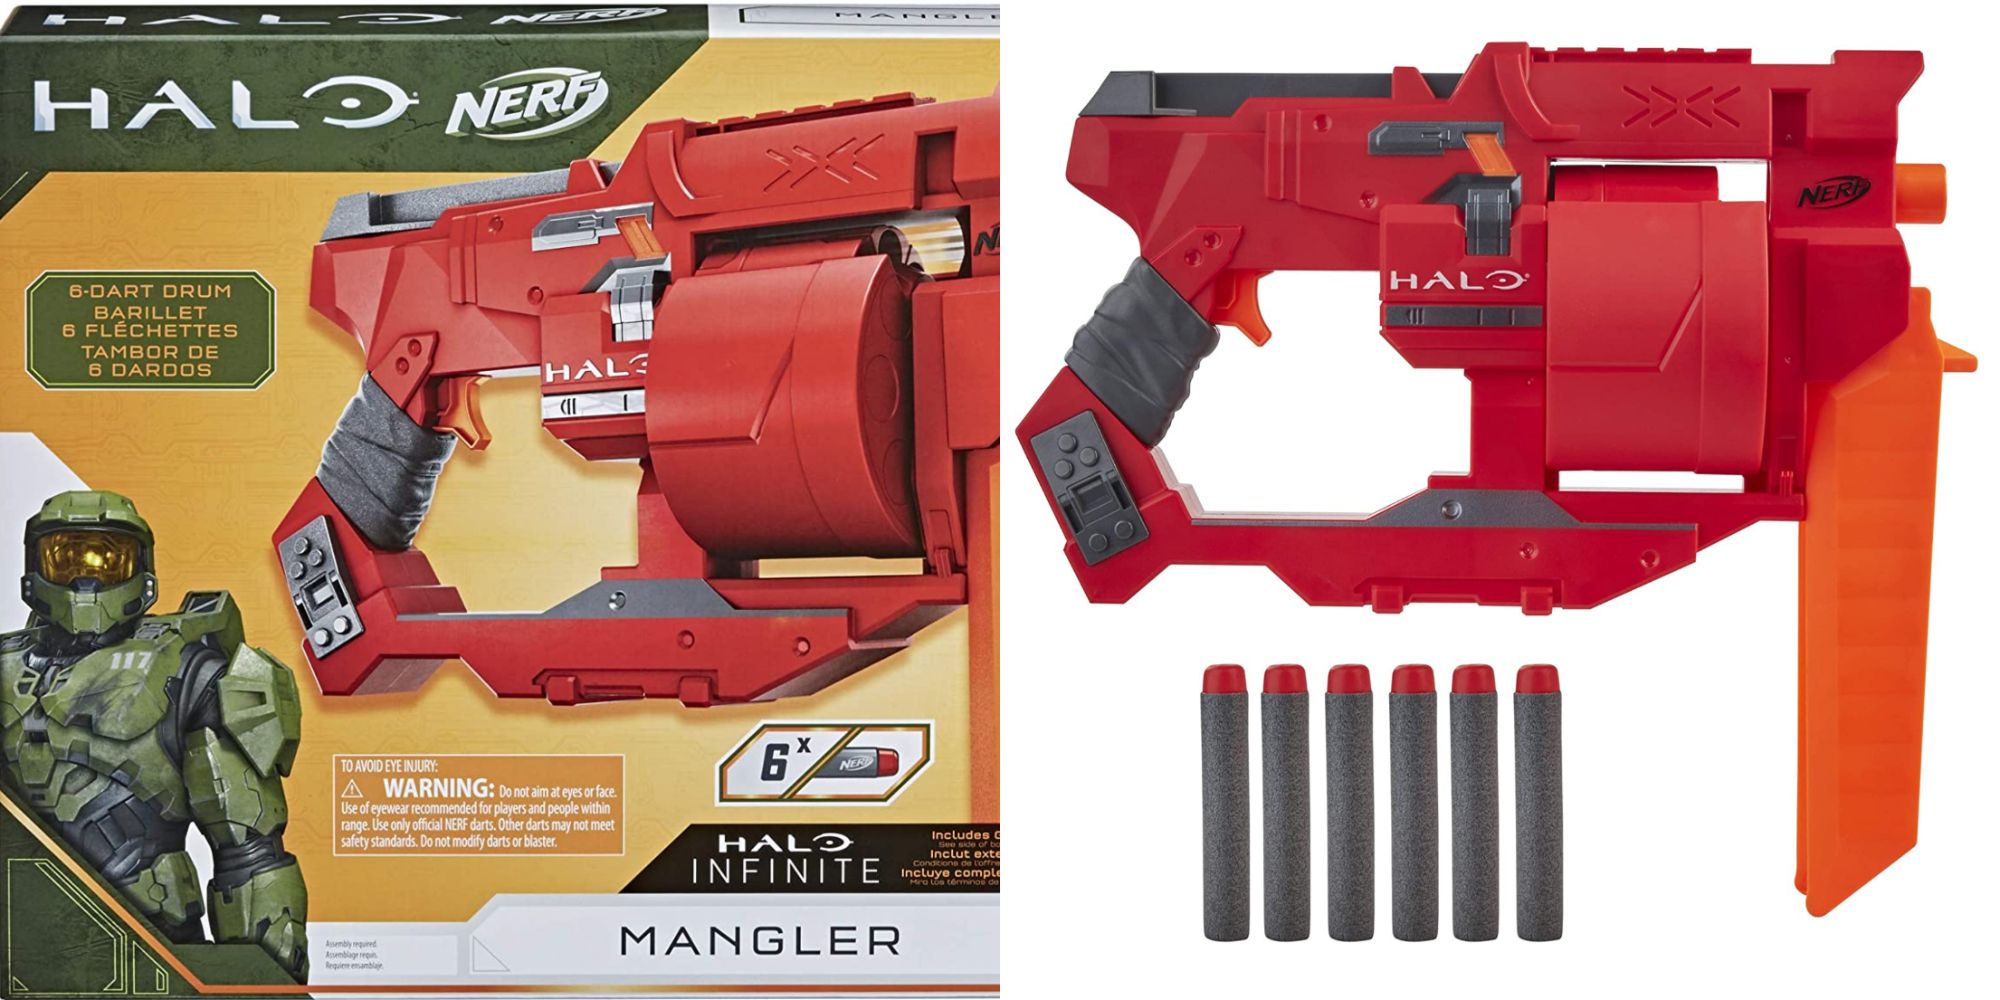 Nerf Halo Mangler toy box and blaster split image